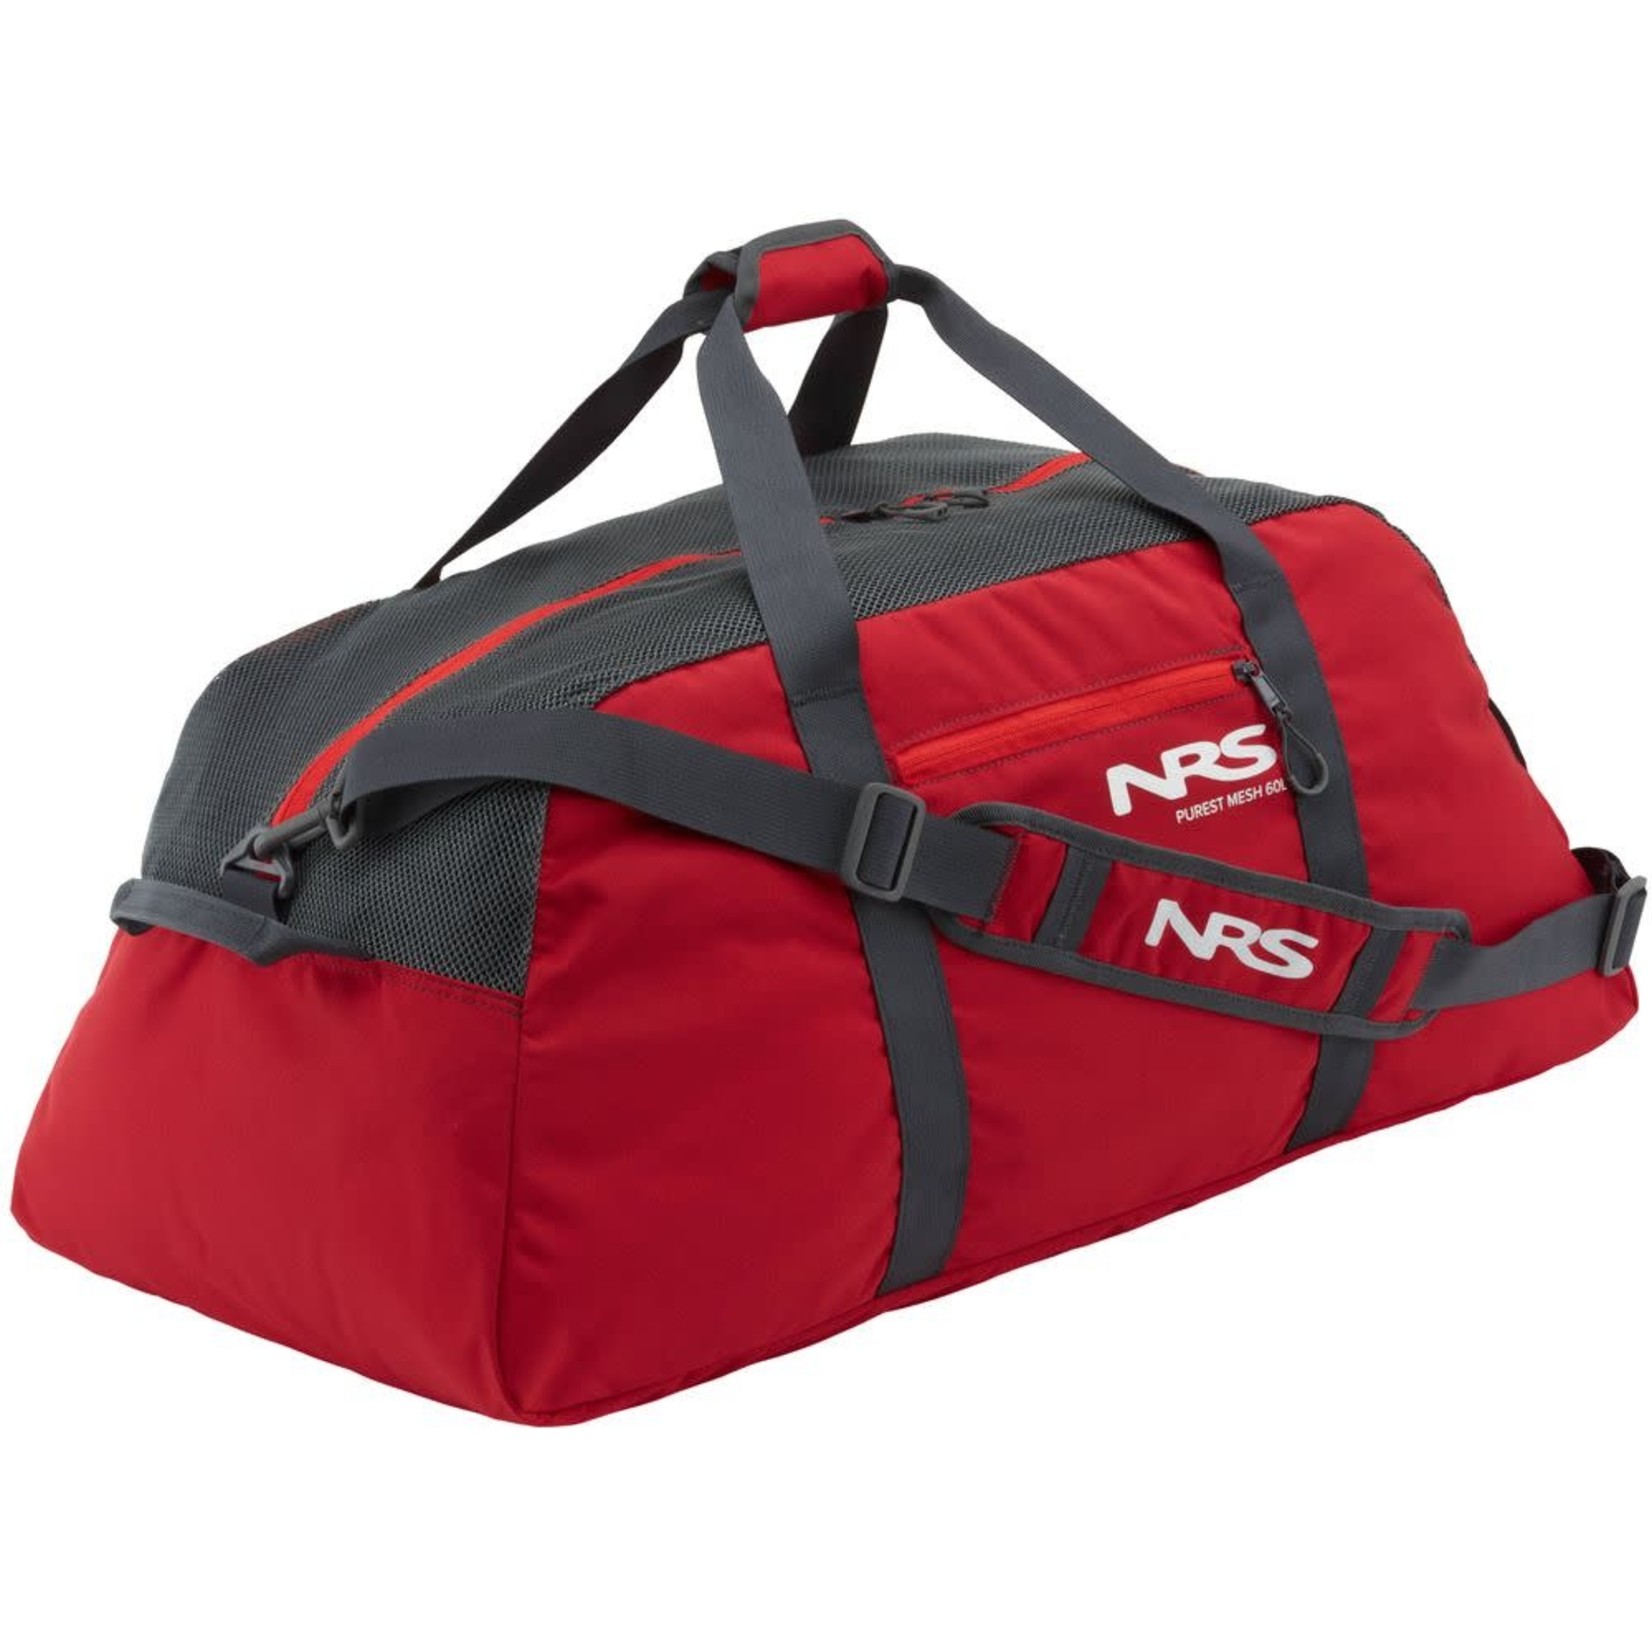 NRS NRS Purest Mesh Duffel Bag **Closeout**